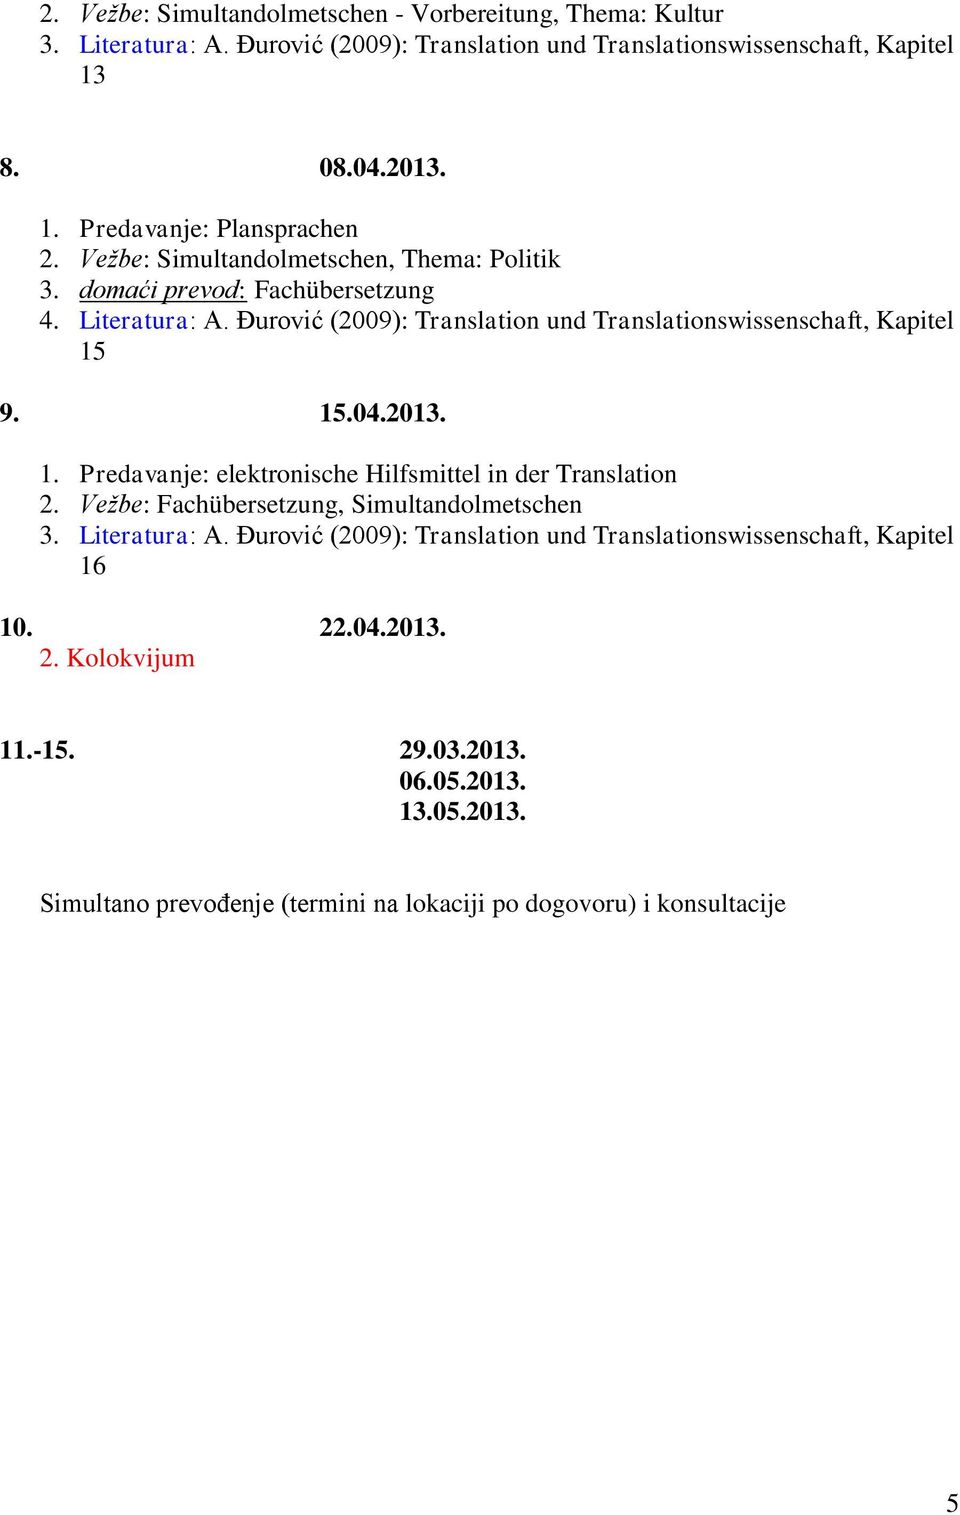 Vežbe: Fachübersetzung, Simultandolmetschen 3. Literatura: A. Đurović (2009): Translation und Translationswissenschaft, Kapitel 16 10. 22.04.2013. 2. Kolokvijum 11.